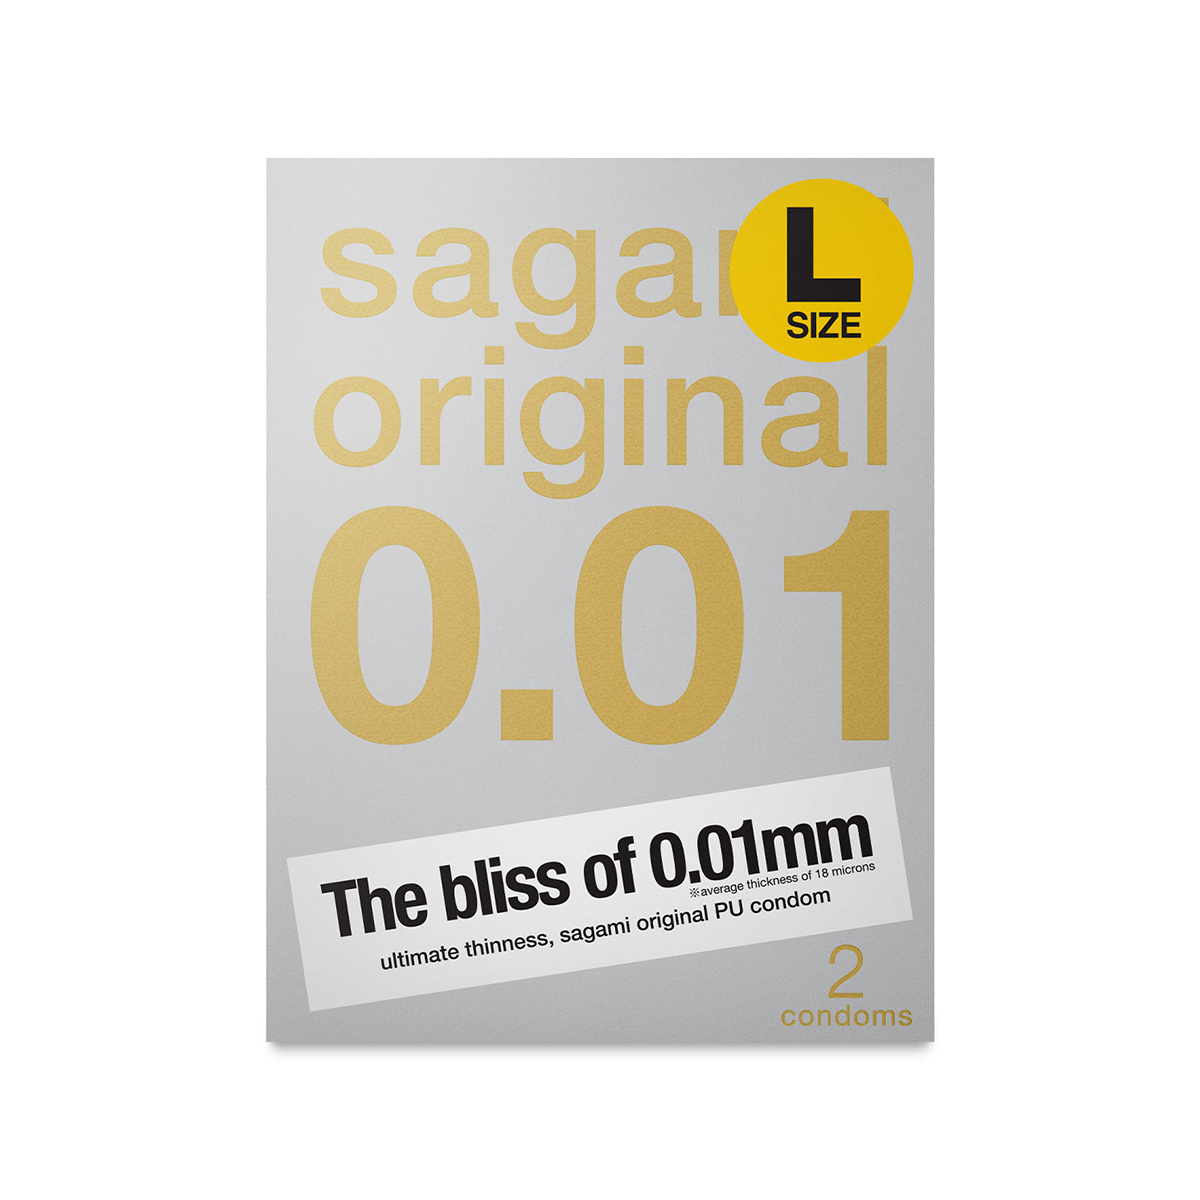 Sagami Original 0.01 Large Size 2s